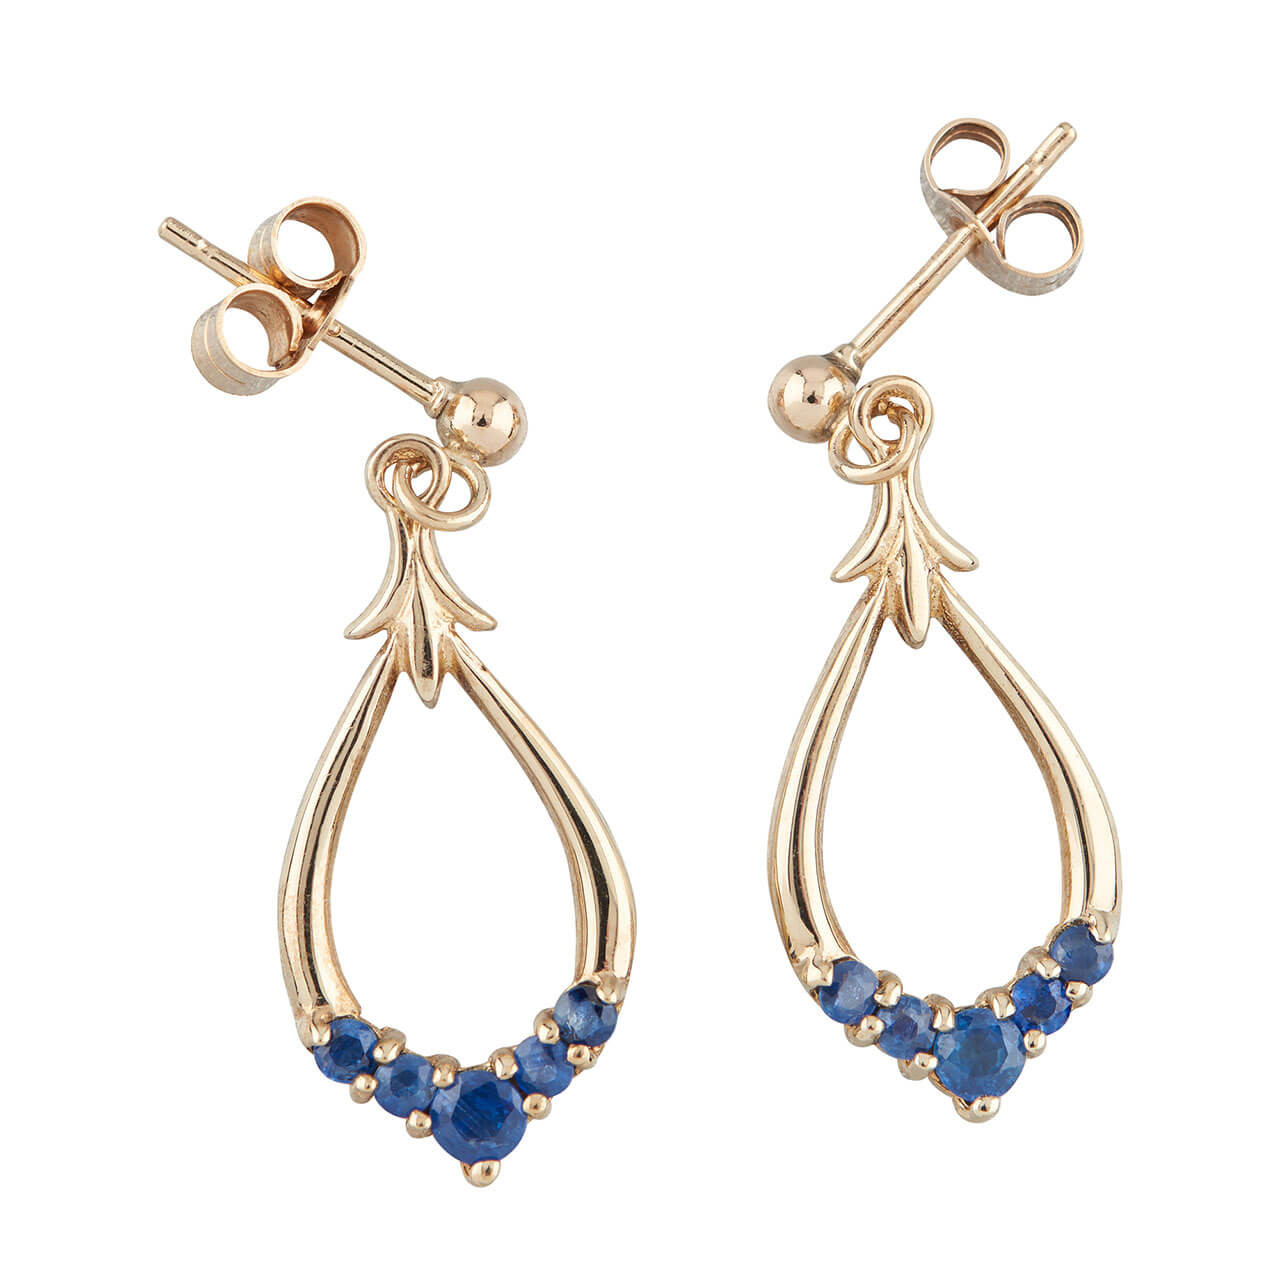 Sapphire and Diamond, 14k White Gold Drop Earrings